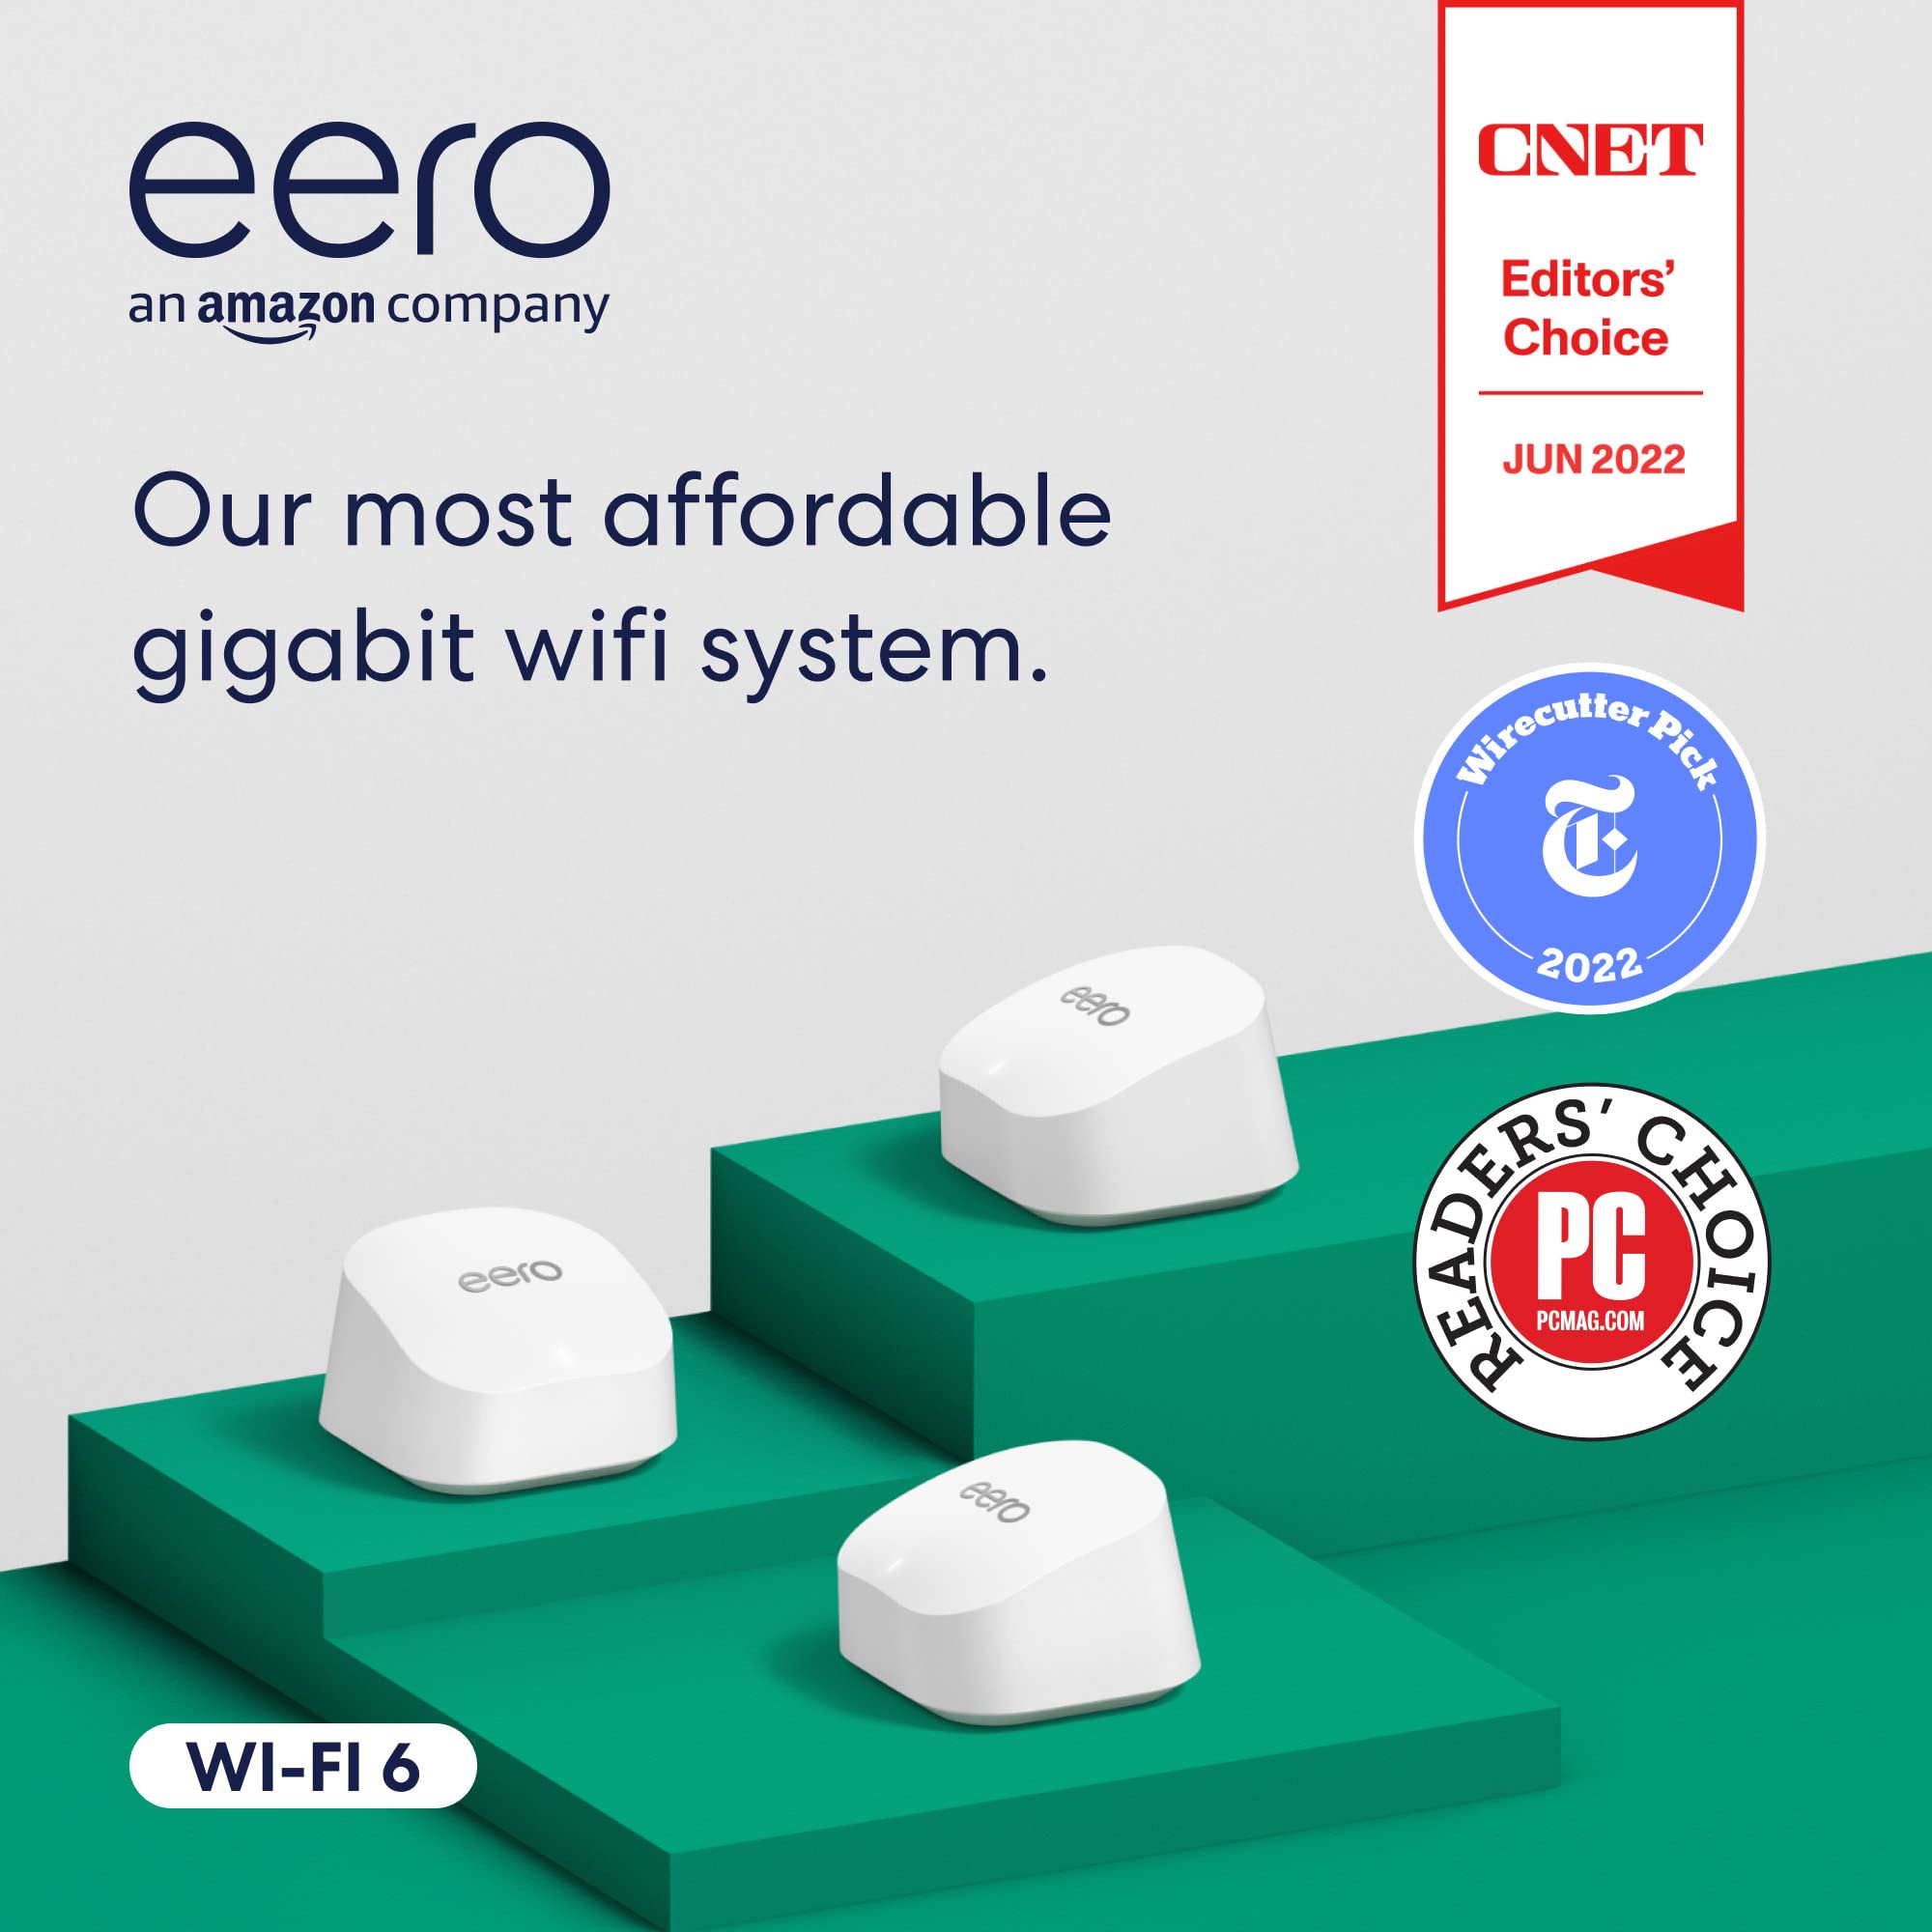 eero 6+ dual-band mesh Wi-Fi 6 router, with built-in Zigbee